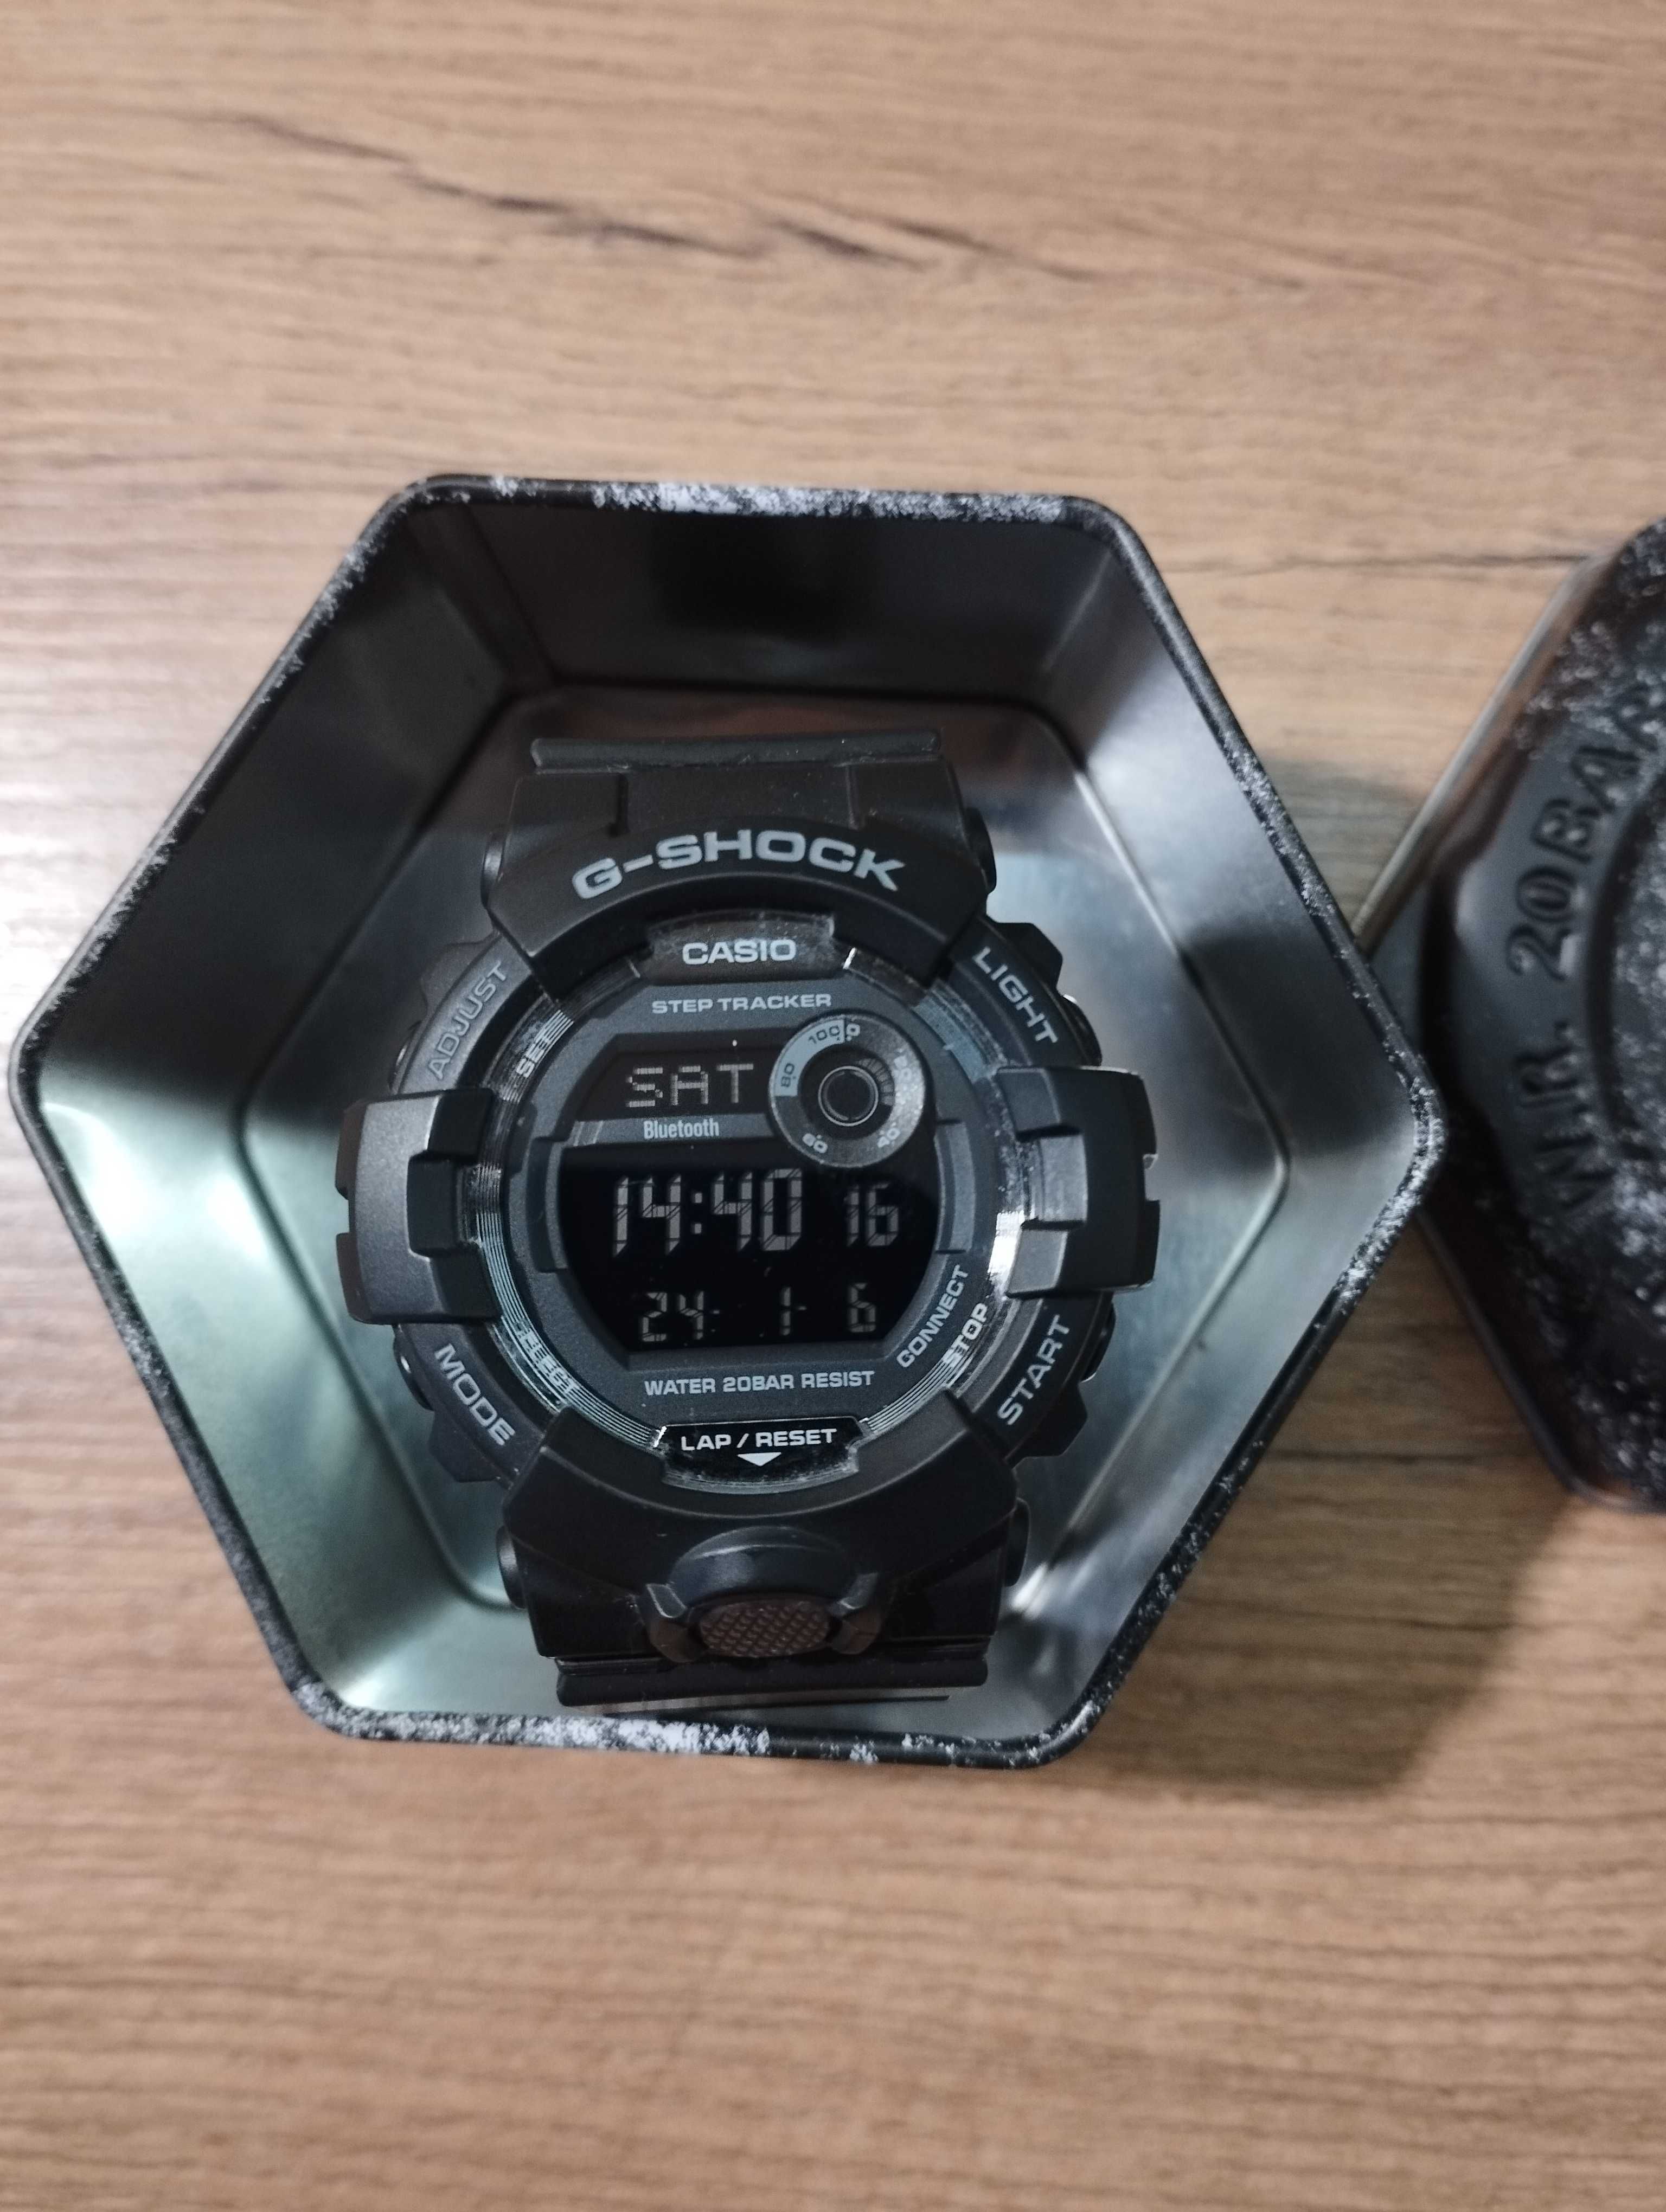 Zegarek CASIO G-Shock GBD-800-1BER